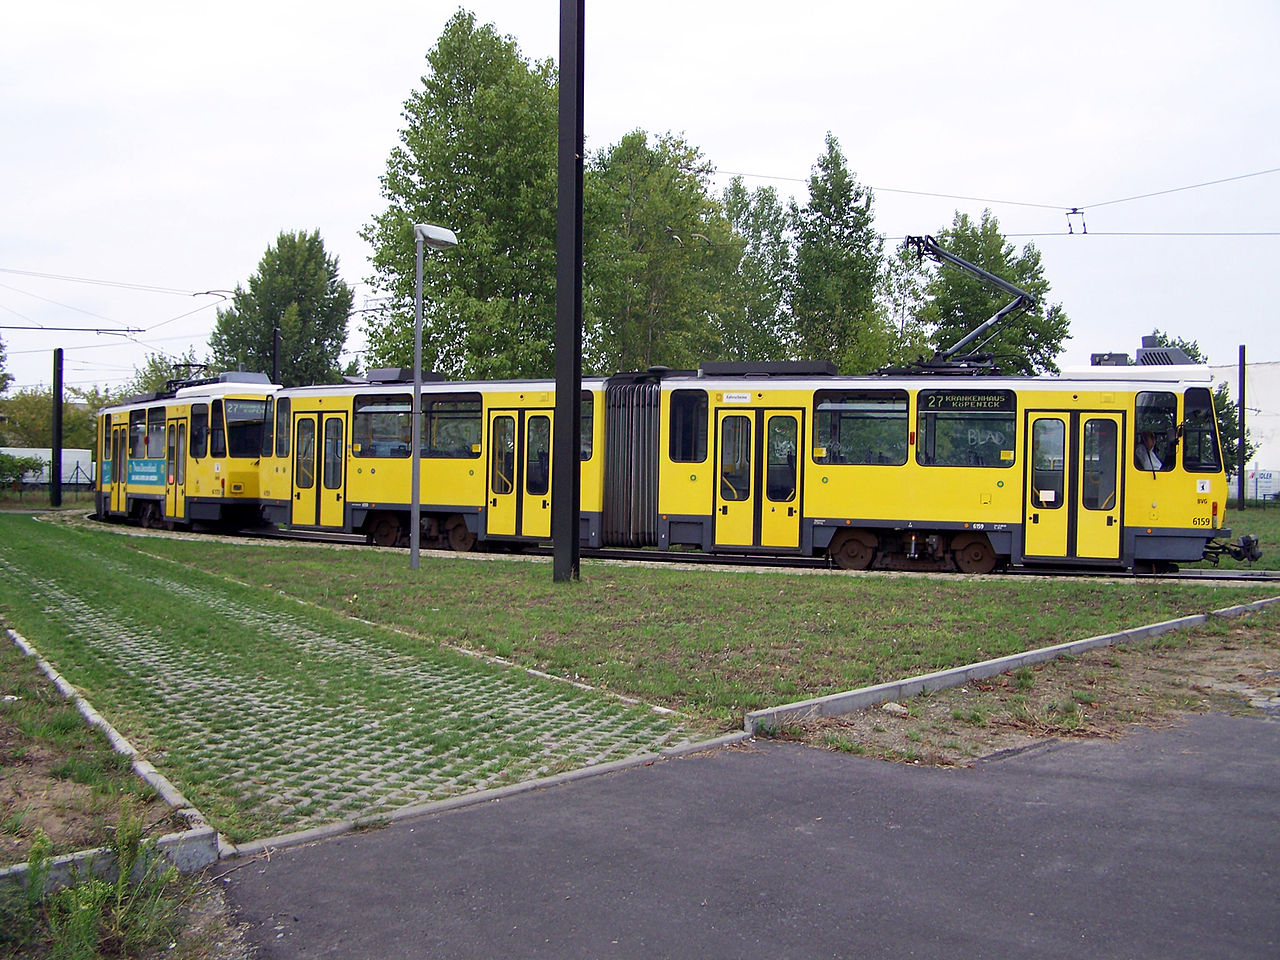 Tramvaj KT4Dm v Berlíně. By Christian Liebscher (Platte) - Own work, CC BY-SA 3.0, https://commons.wikimedia.org/w/index.php?curid=4638407